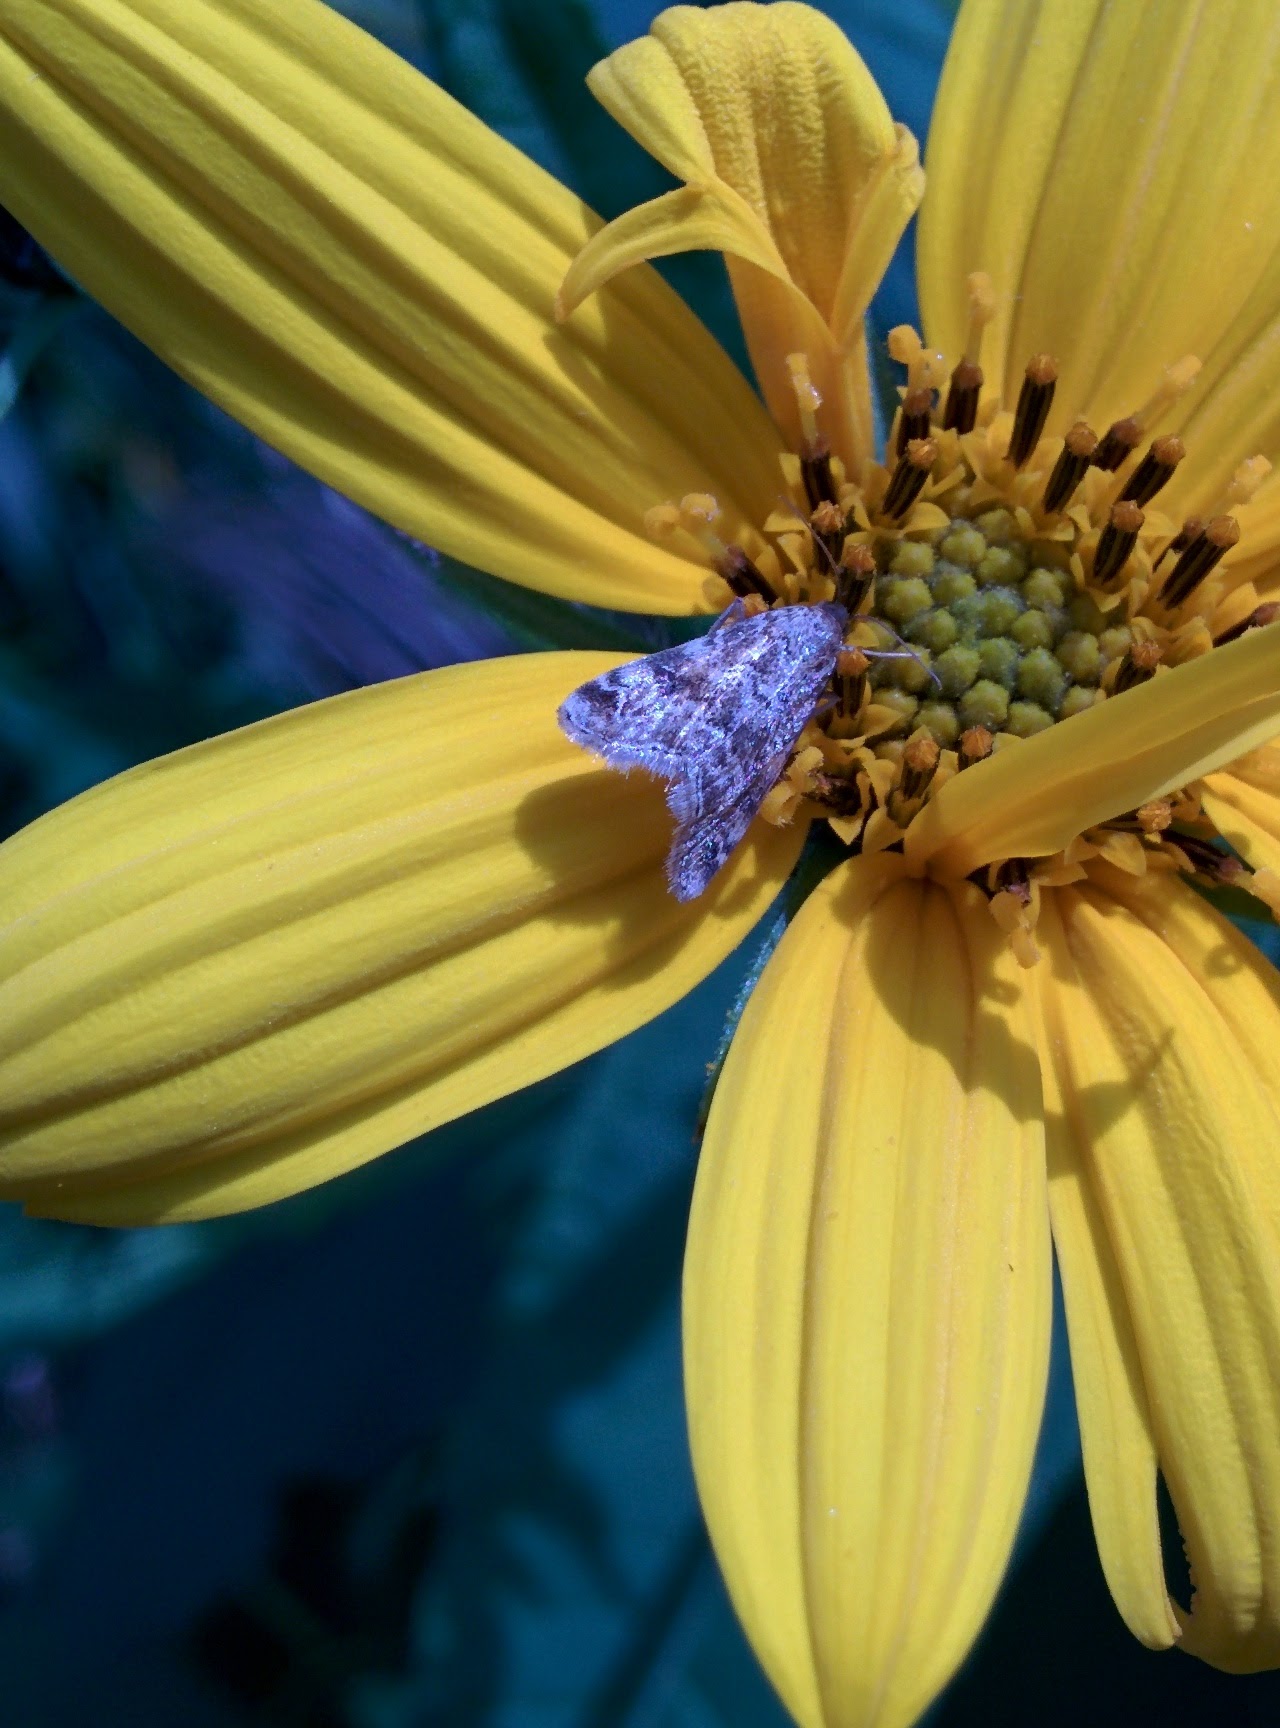 IMG_20151004_114216.jpg 노란색 뚱딴지 꽃을 찾은 작은 나방, 명나방 종류